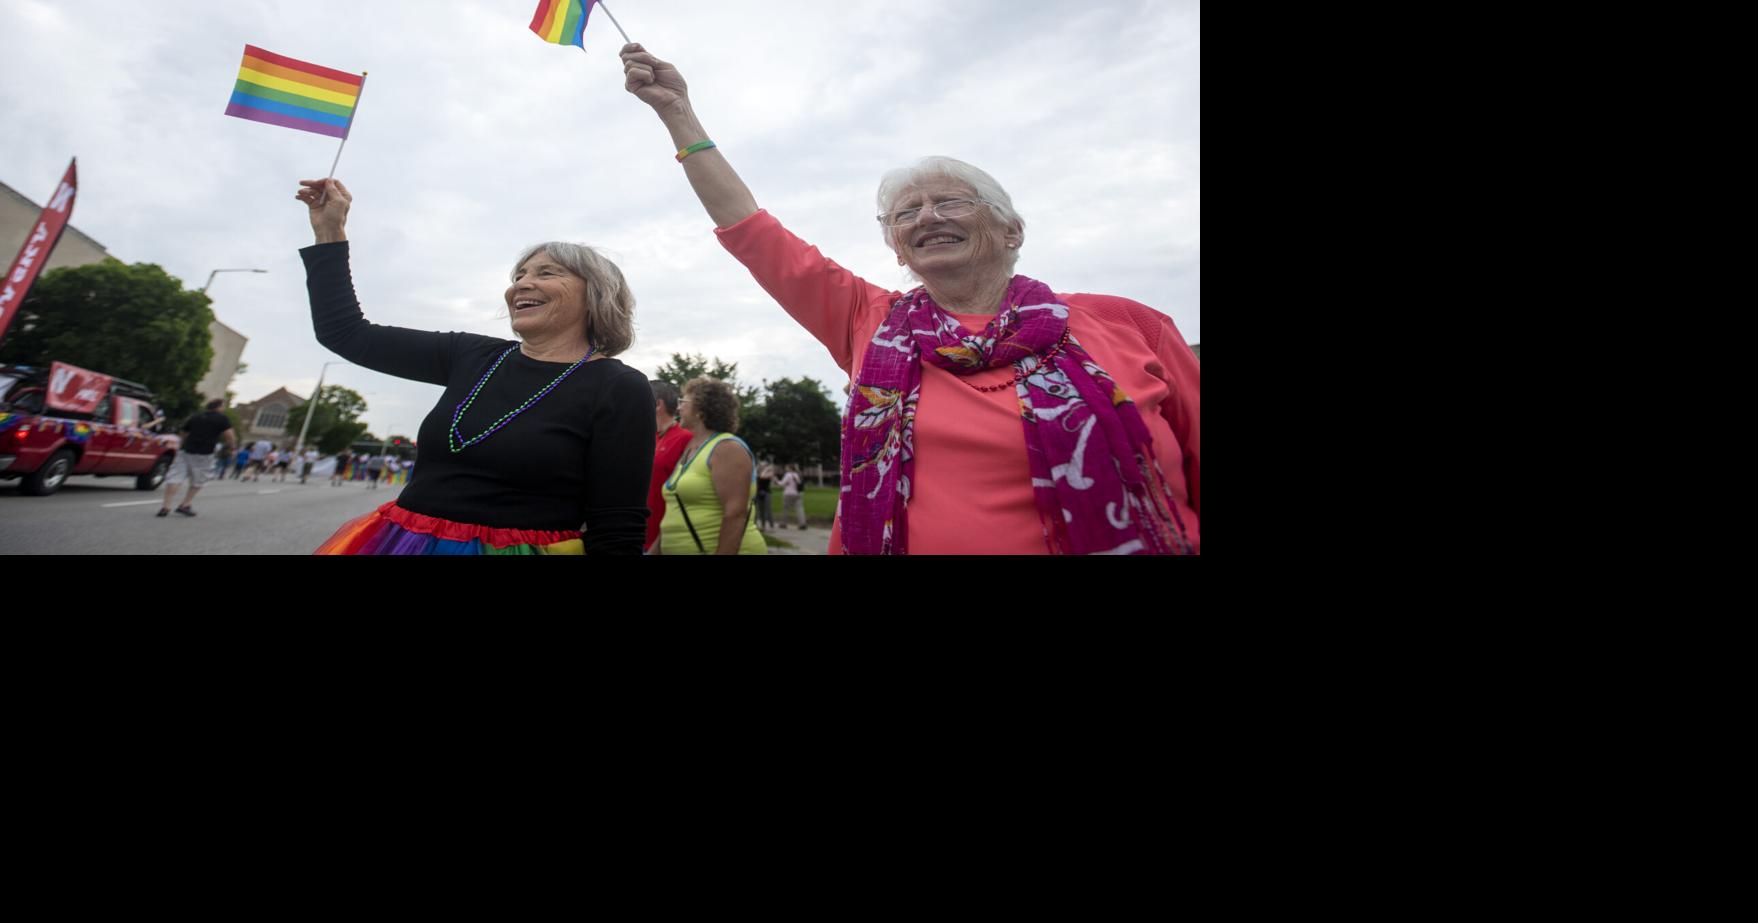 Hundreds gather at Nebraska Capitol to celebrate Lincoln’s third Pride parade